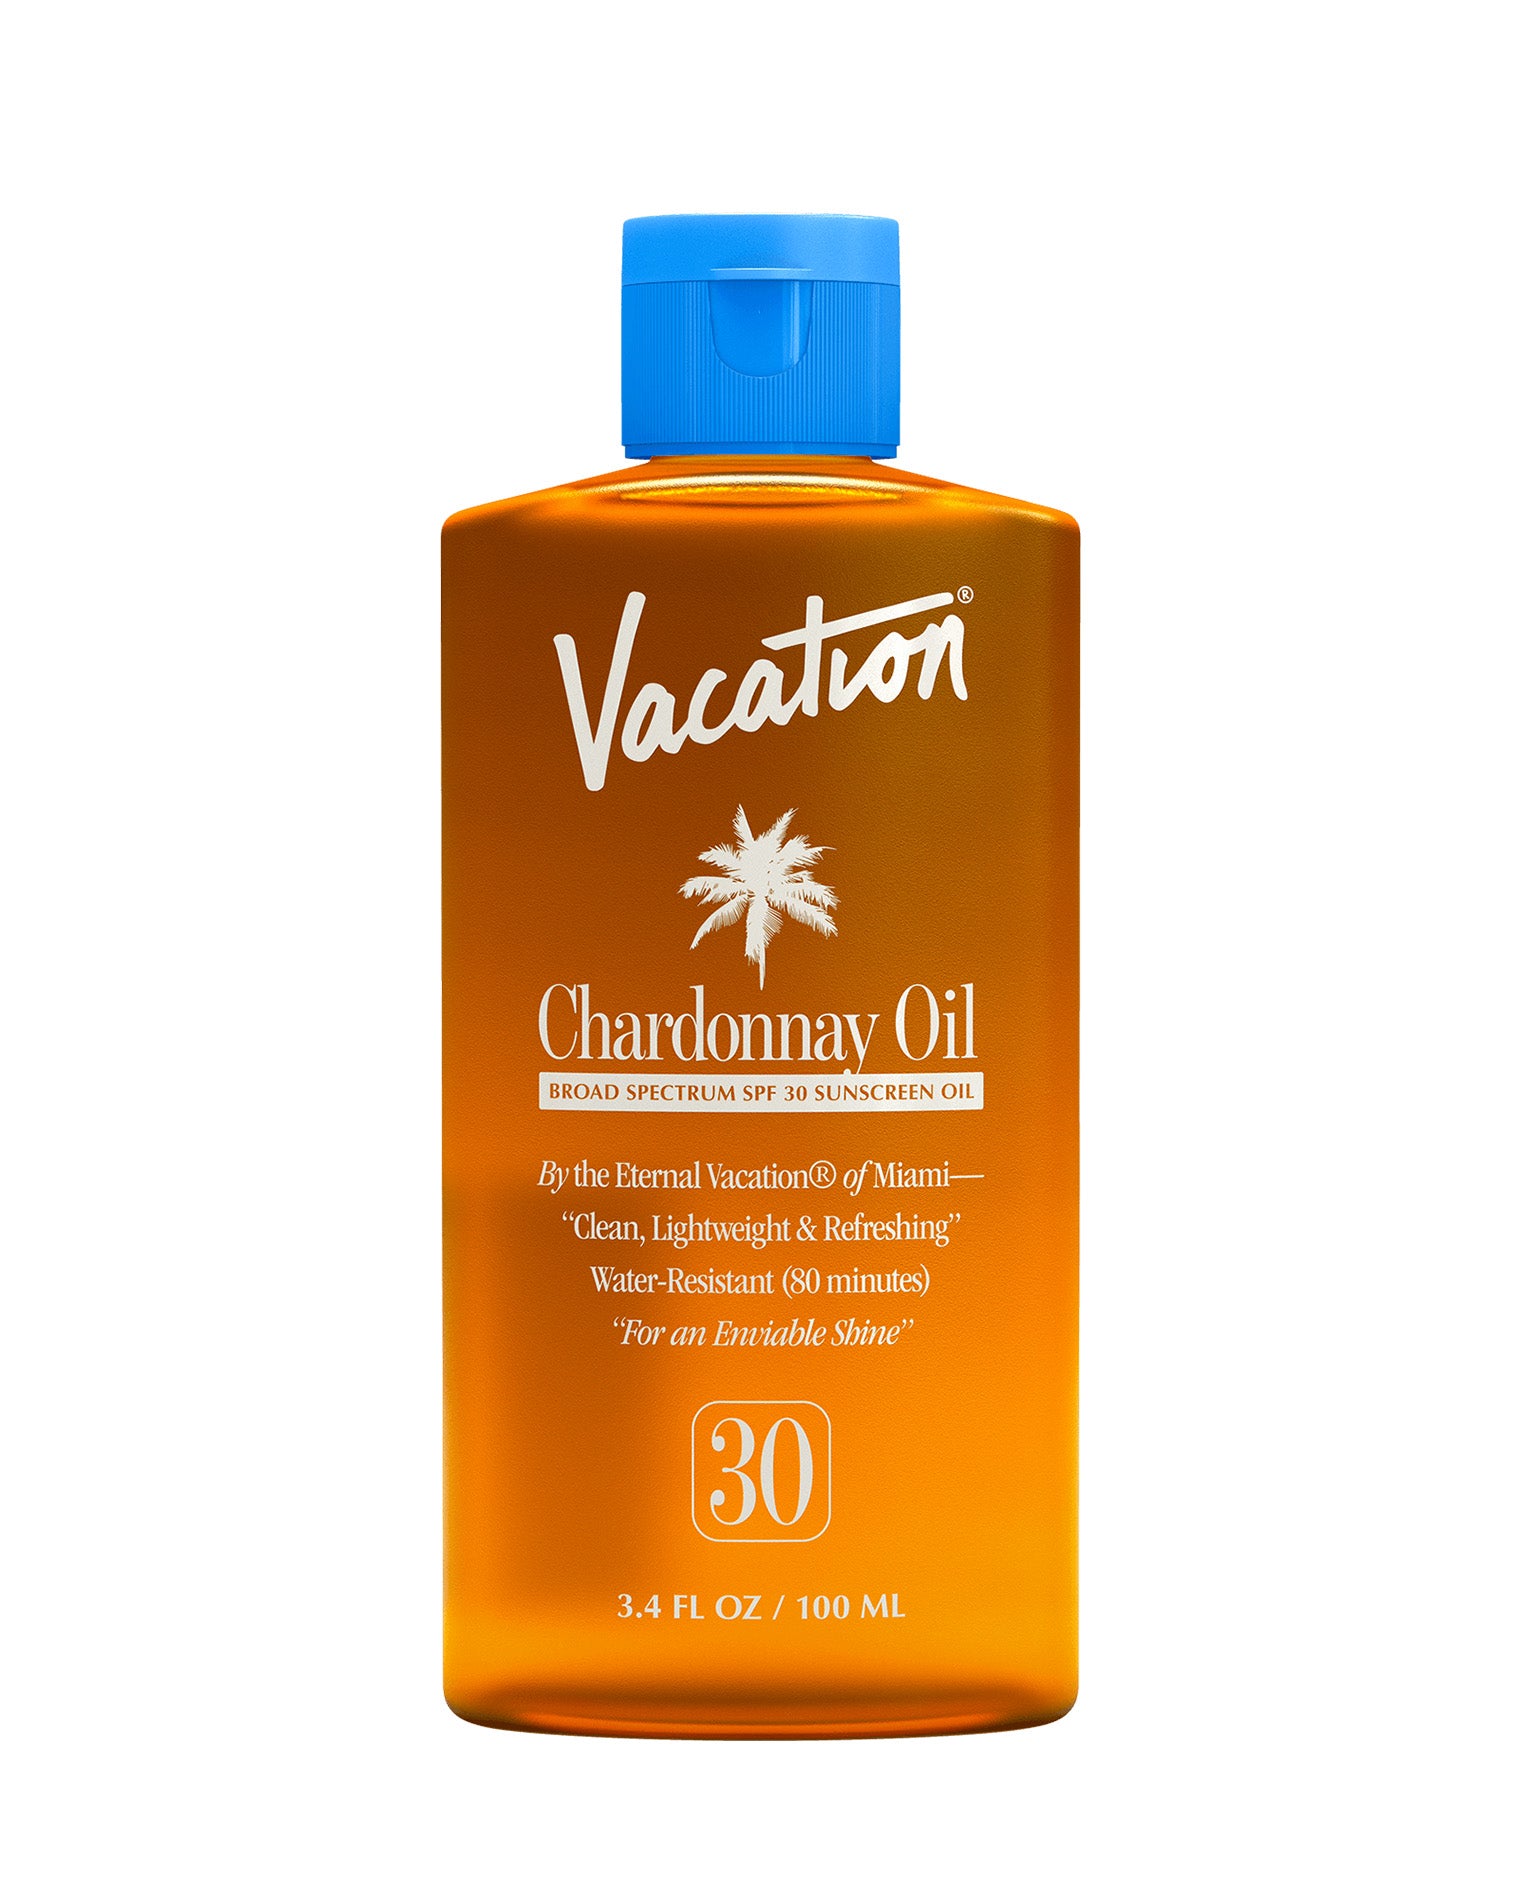 Vacation Chardonnay Oil SPF 30 NCOL